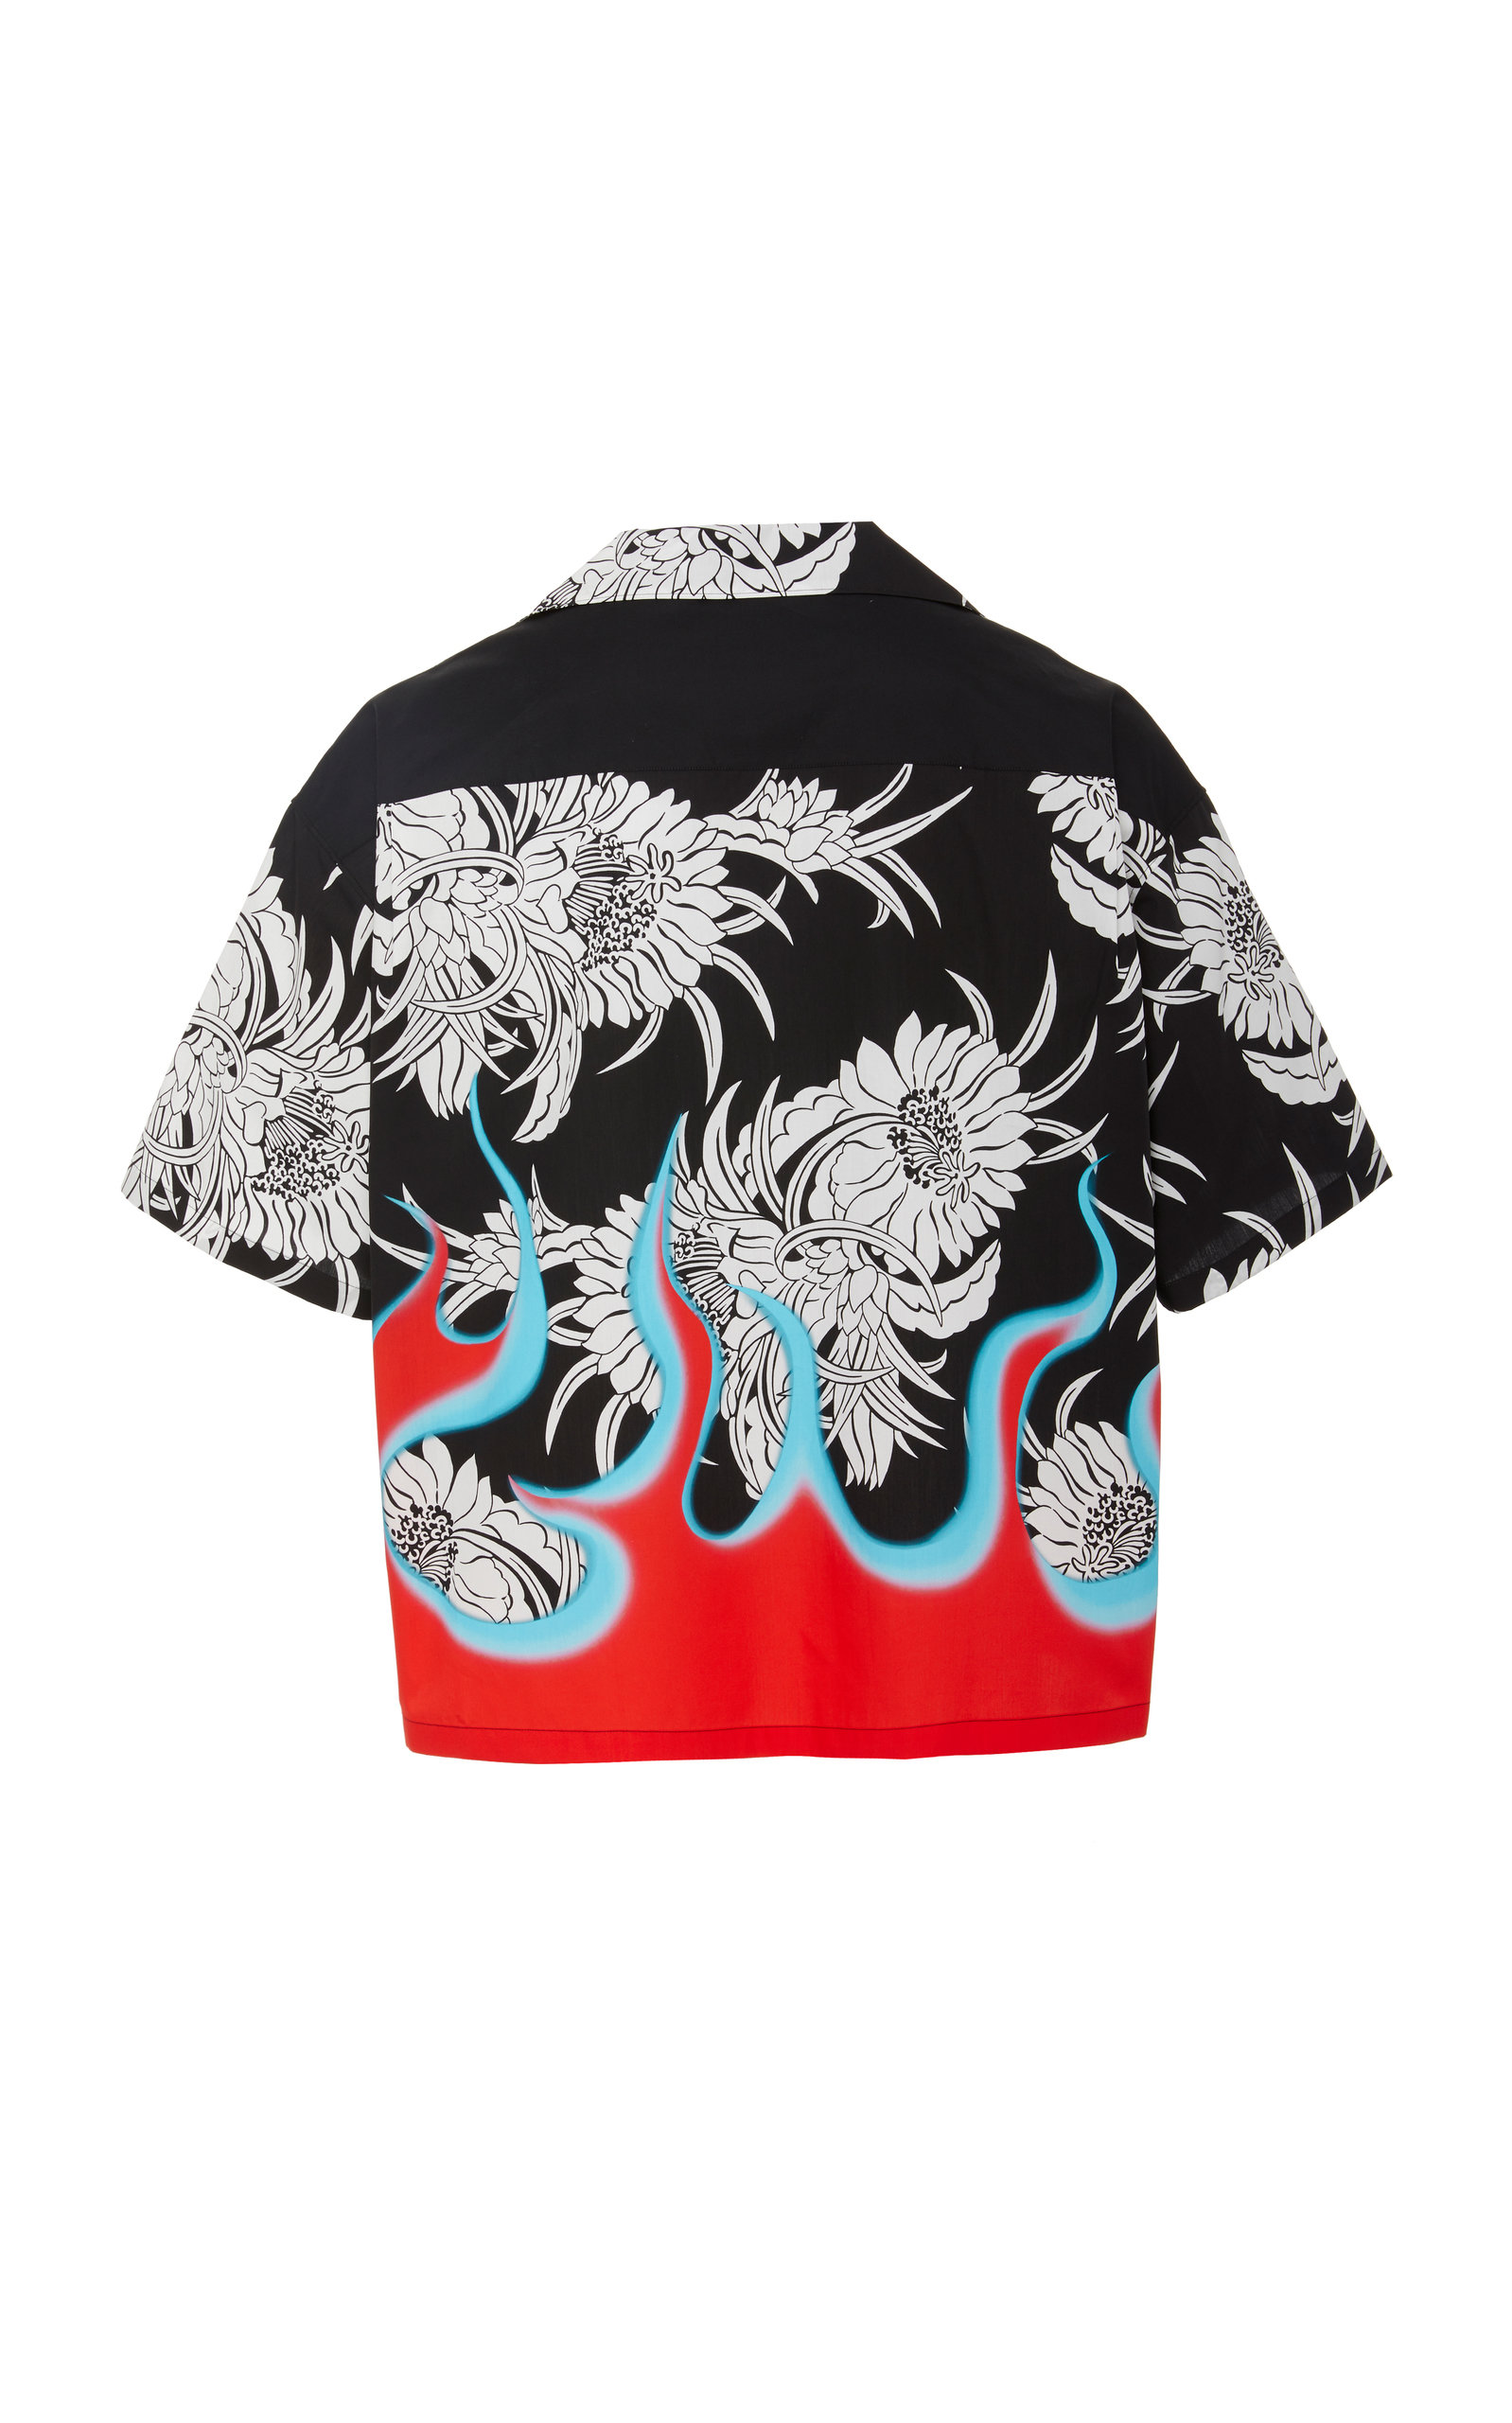 prada dragon shirt, OFF 76%,Cheap price!